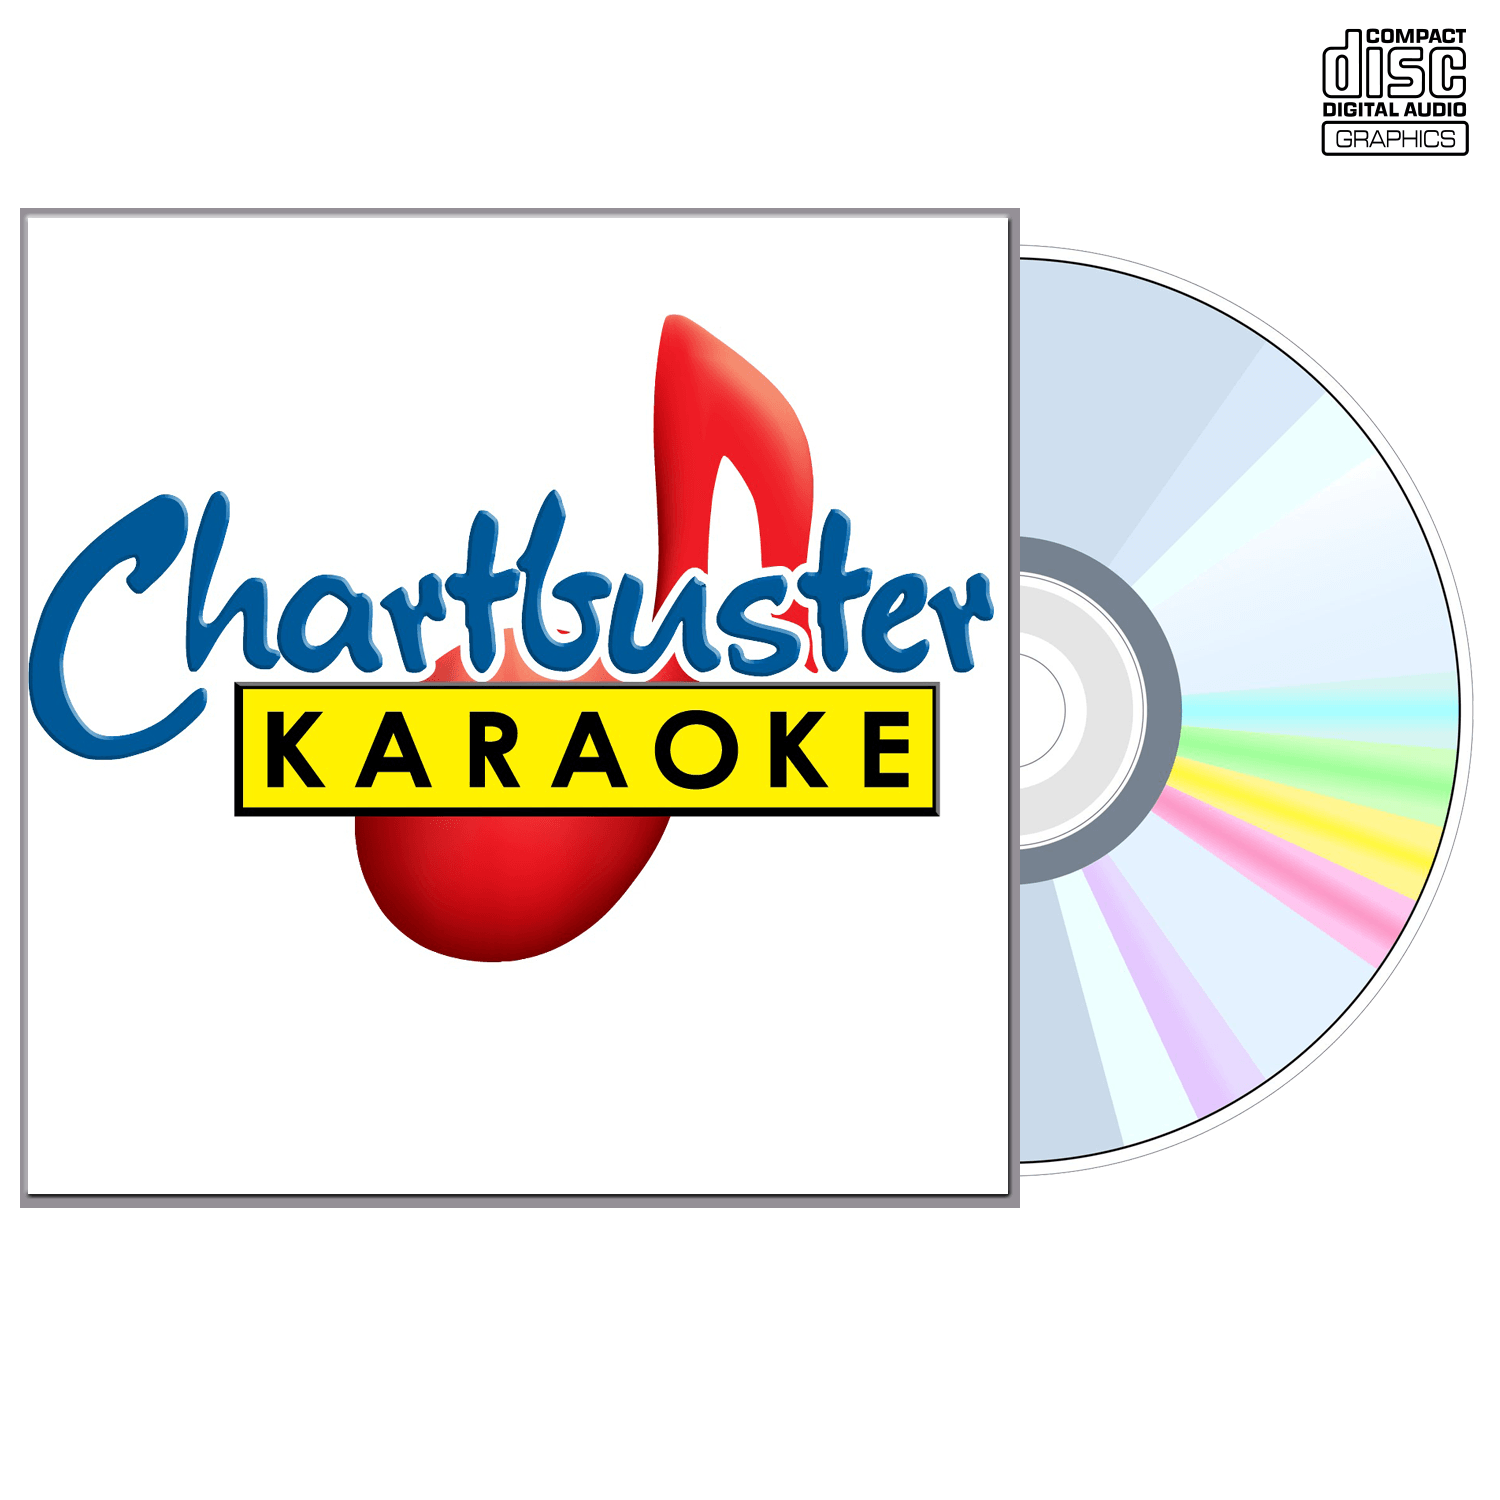 Alan Jackson Vol 3 - CD+G - Chartbuster Karaoke - Karaoke Home Entertainment